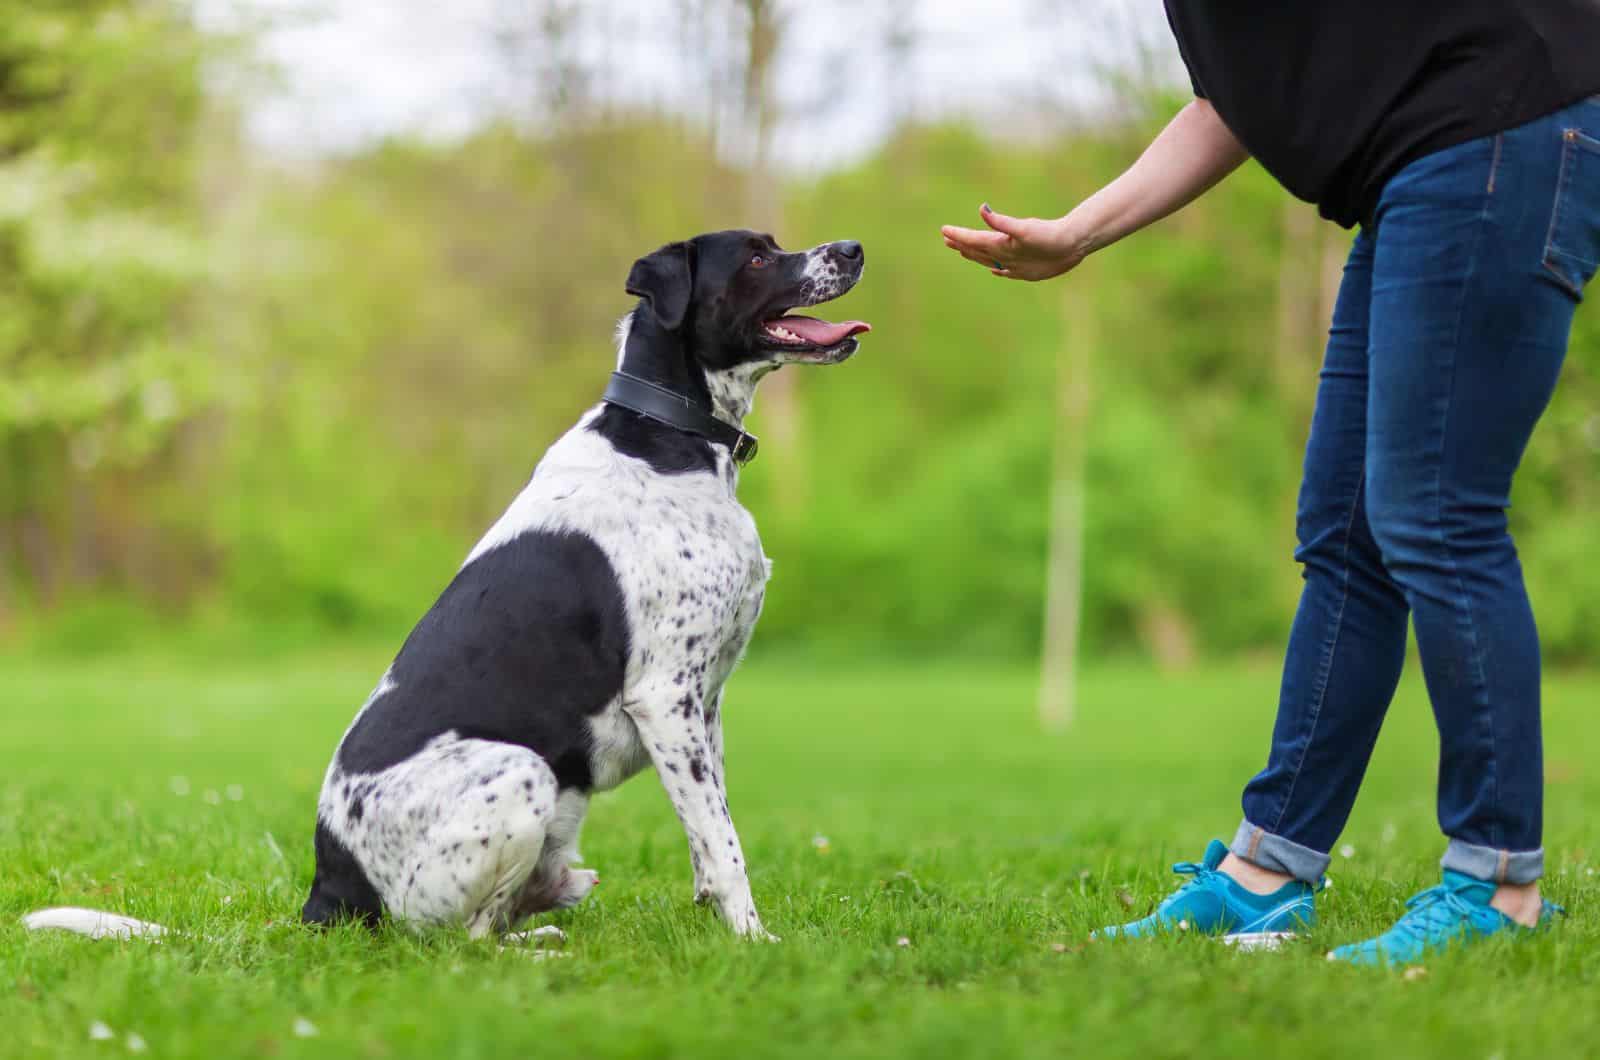 owner training their dog at park.jpg